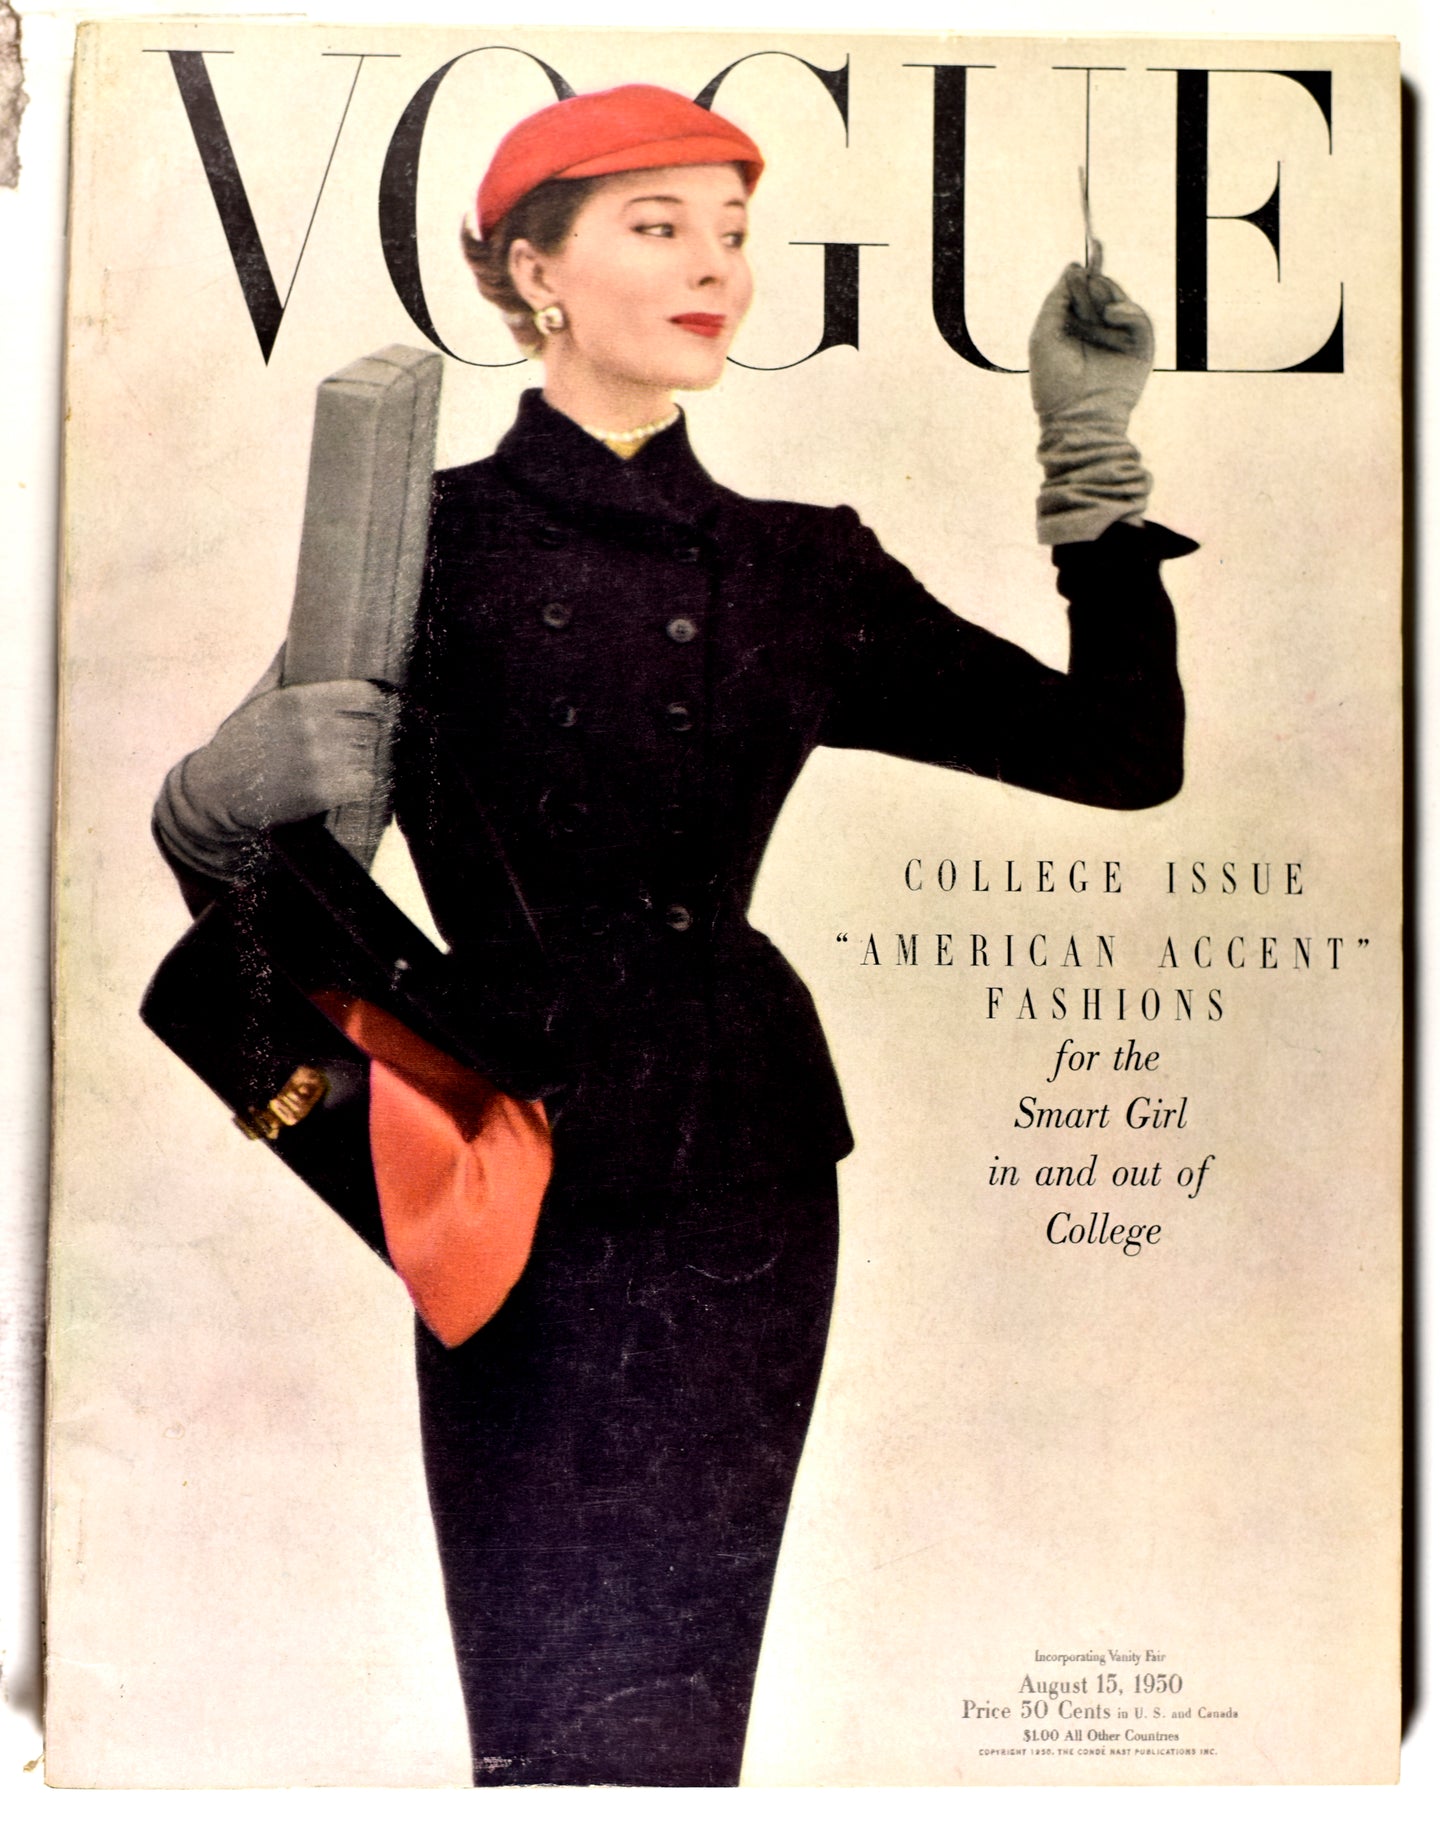 Vogue [1950/08/15]